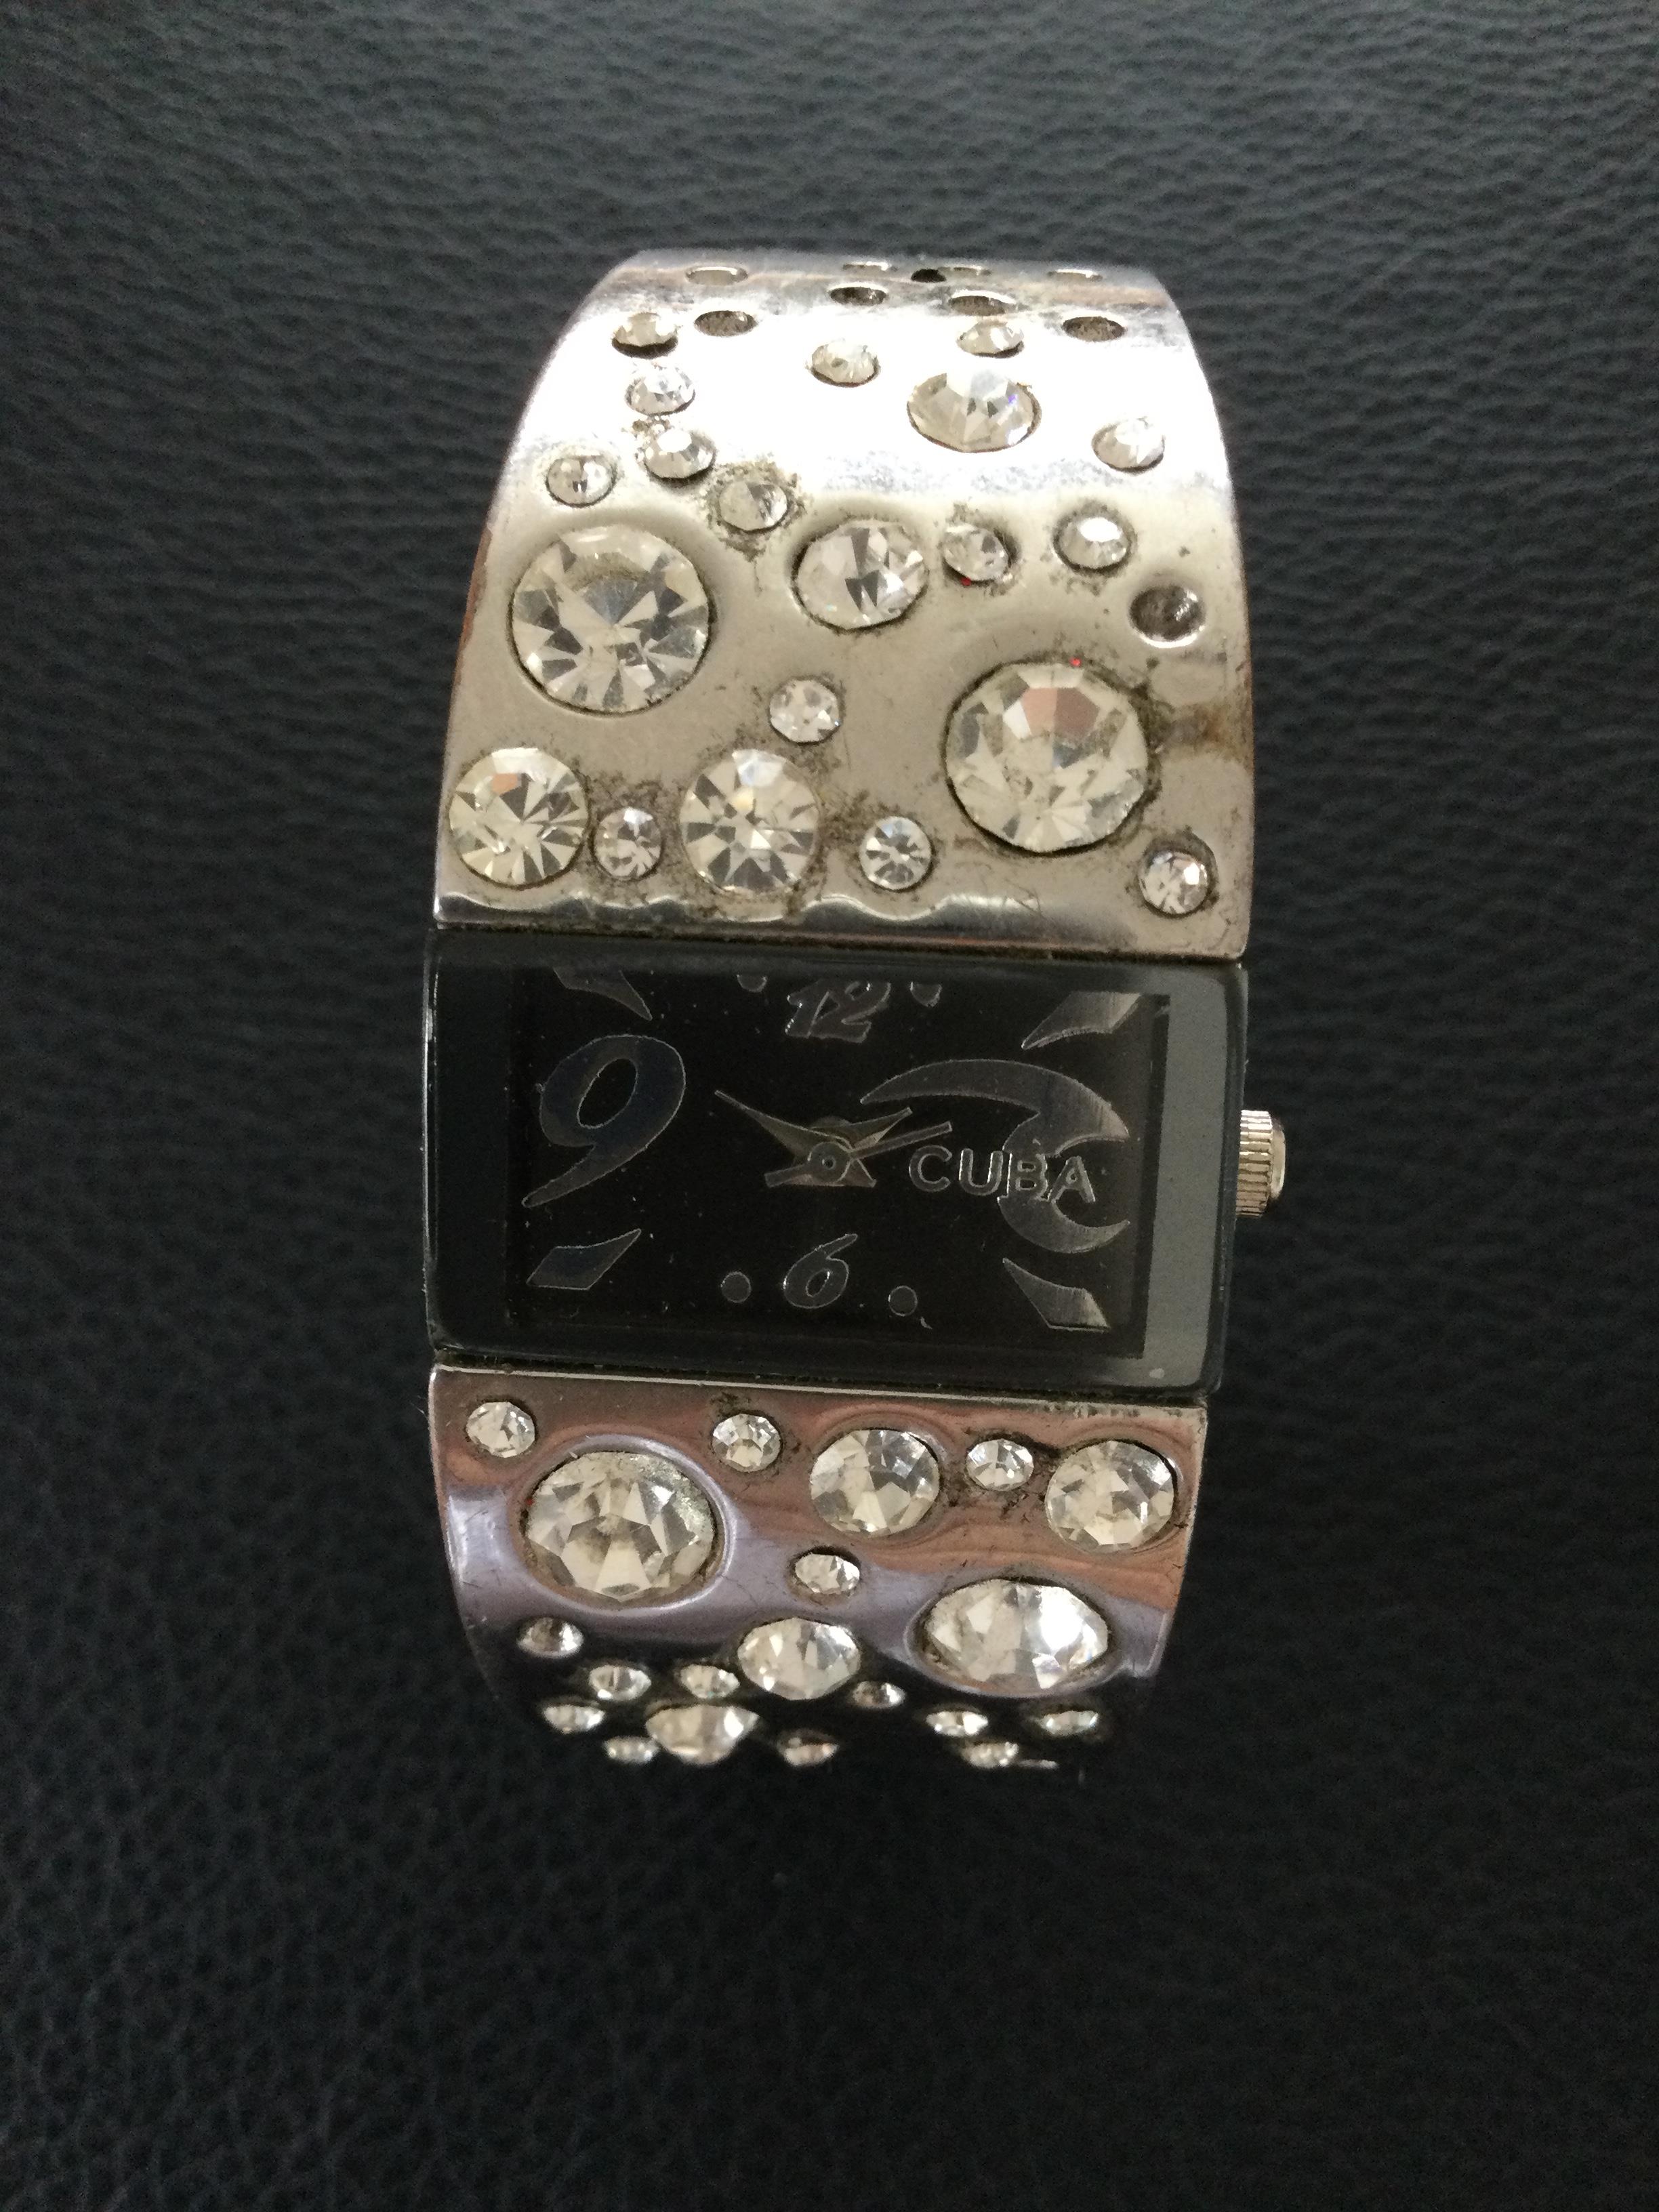 Cuba Ladies Diamante Wristwatch with Sprung Adjusted Bracelet (GS 123) - Image 3 of 5